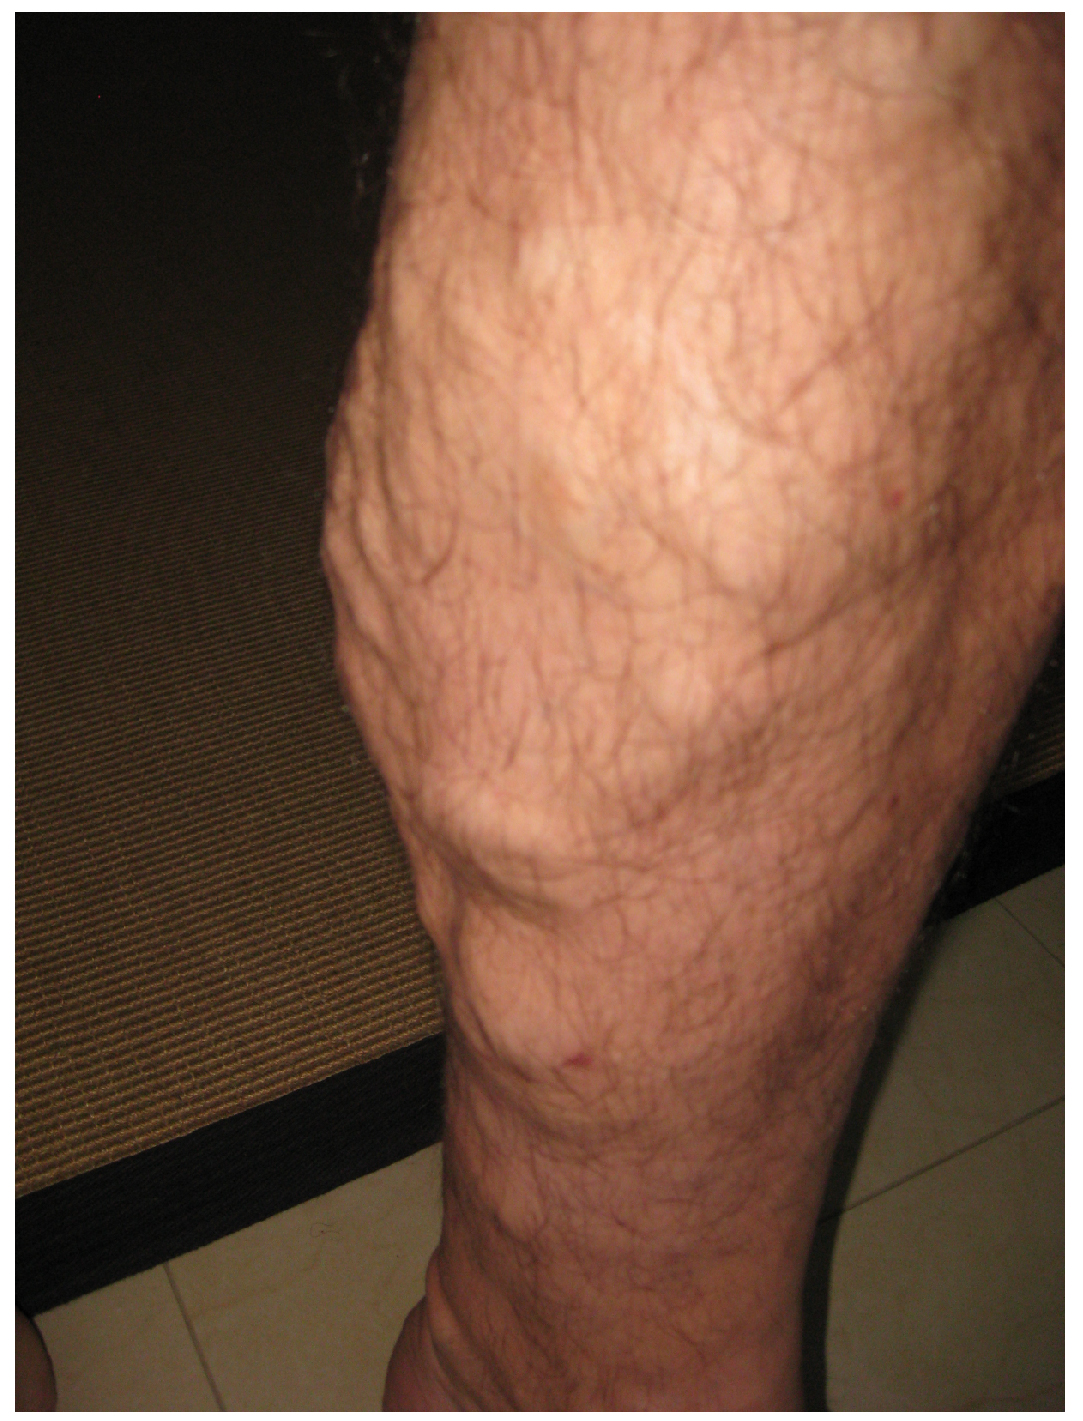 Esta foto mostra a perna de uma pessoa.